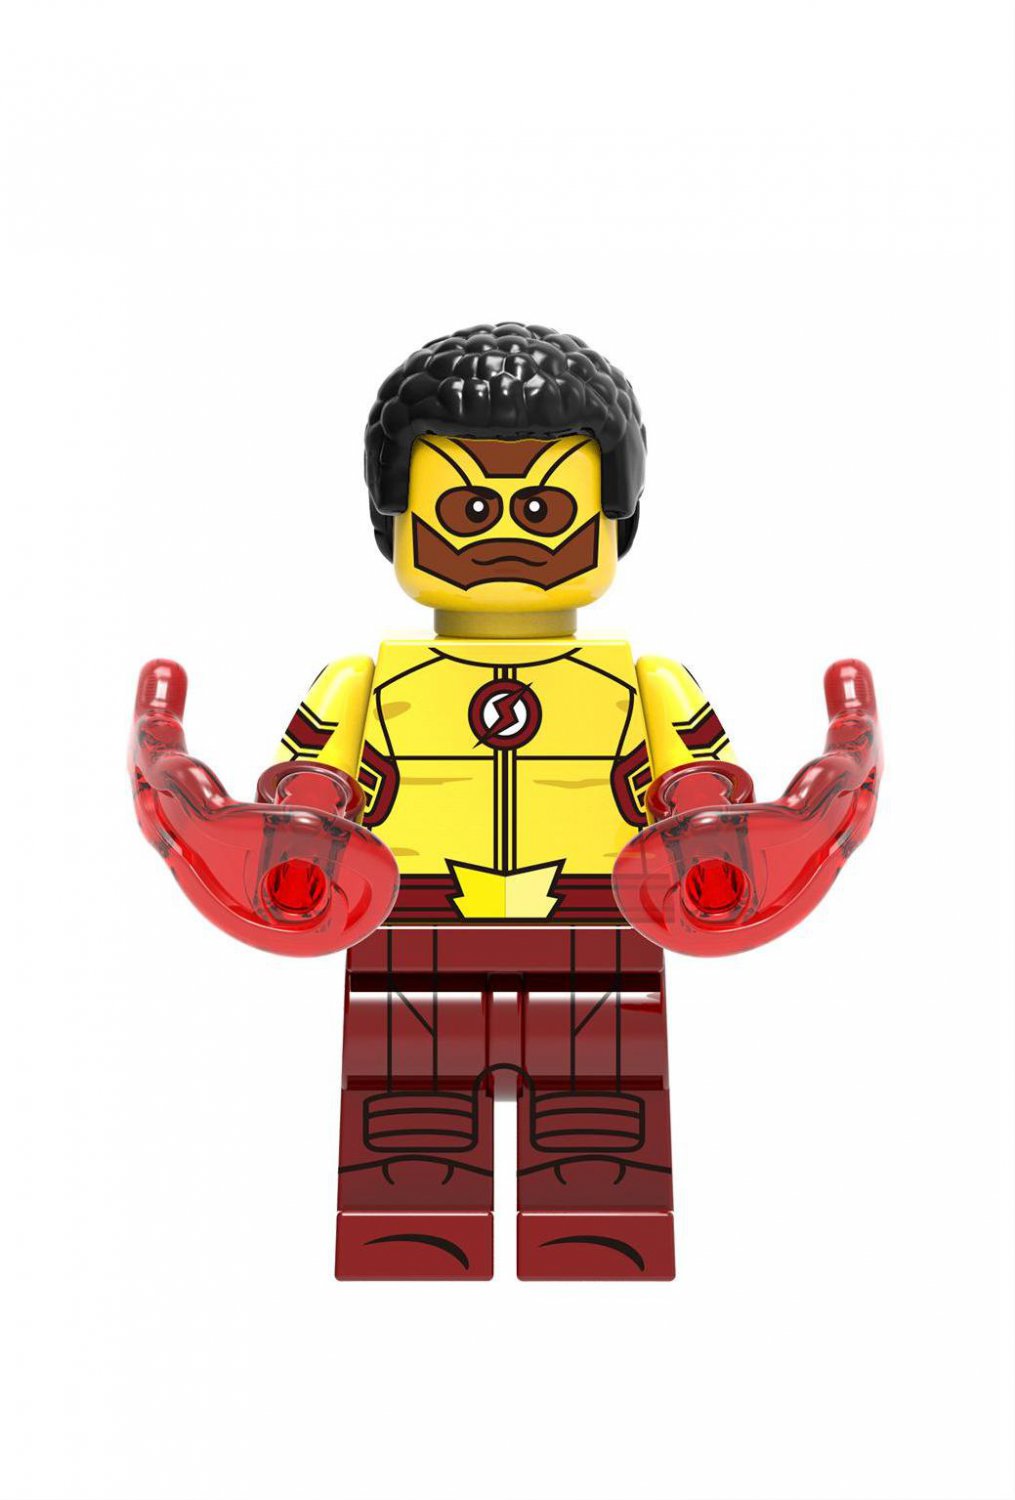 Wally West Minifigures Lego Compatible Justice League Minifigure